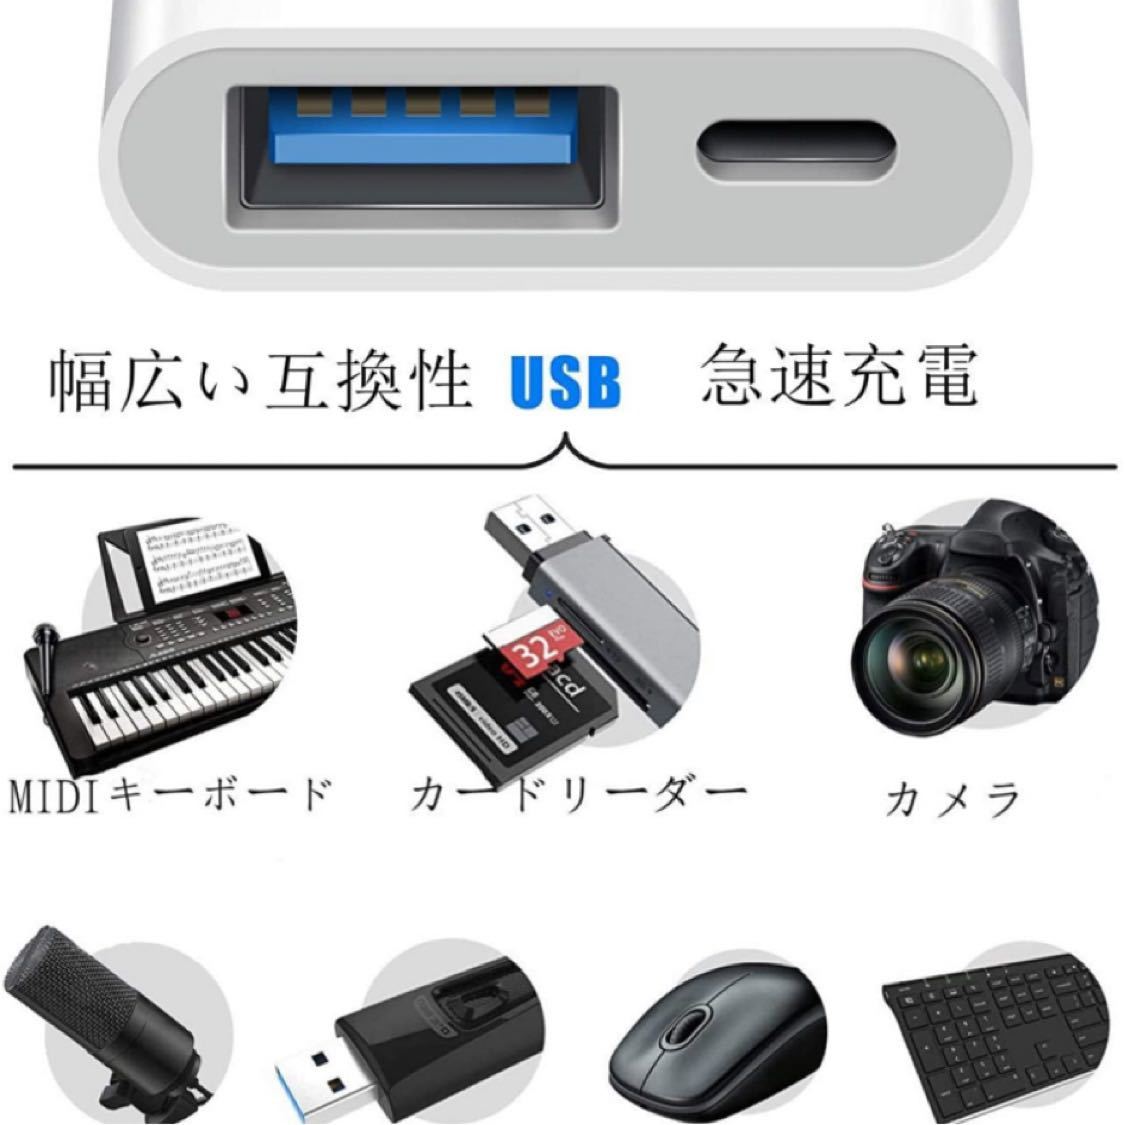 USB変換アダプタ i-Phone/i-Padに適用 2in1 USB変換OTG機能双方向 高速転送 i-Phone/i-Pad高速充電専用アダプタ